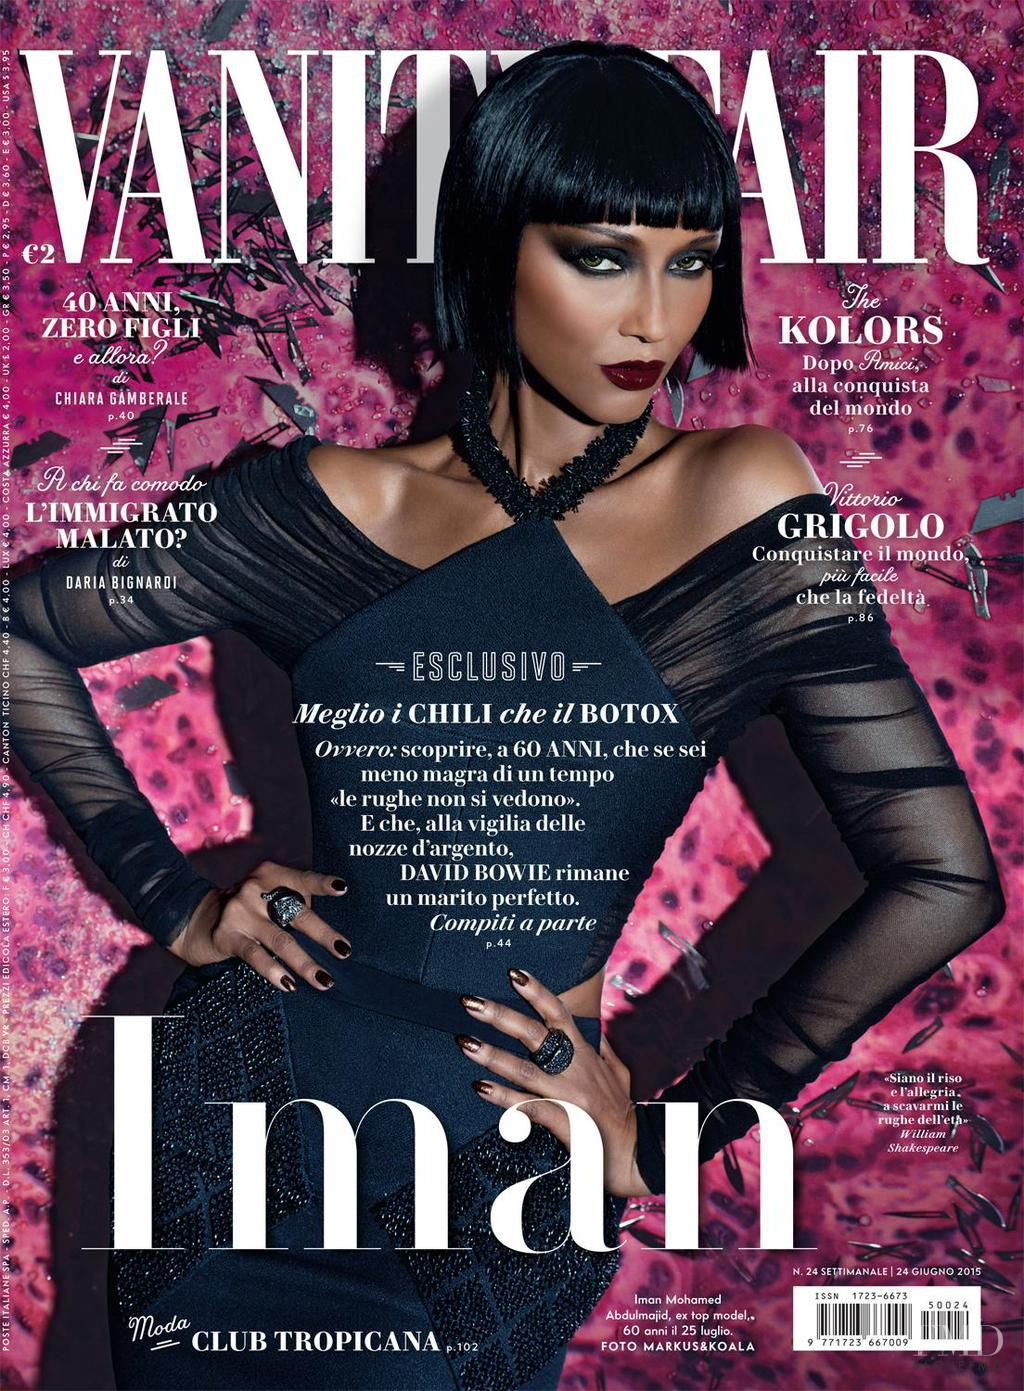 Cover of Vanity Fair Italy with Iman Abdulmajid, June 2015